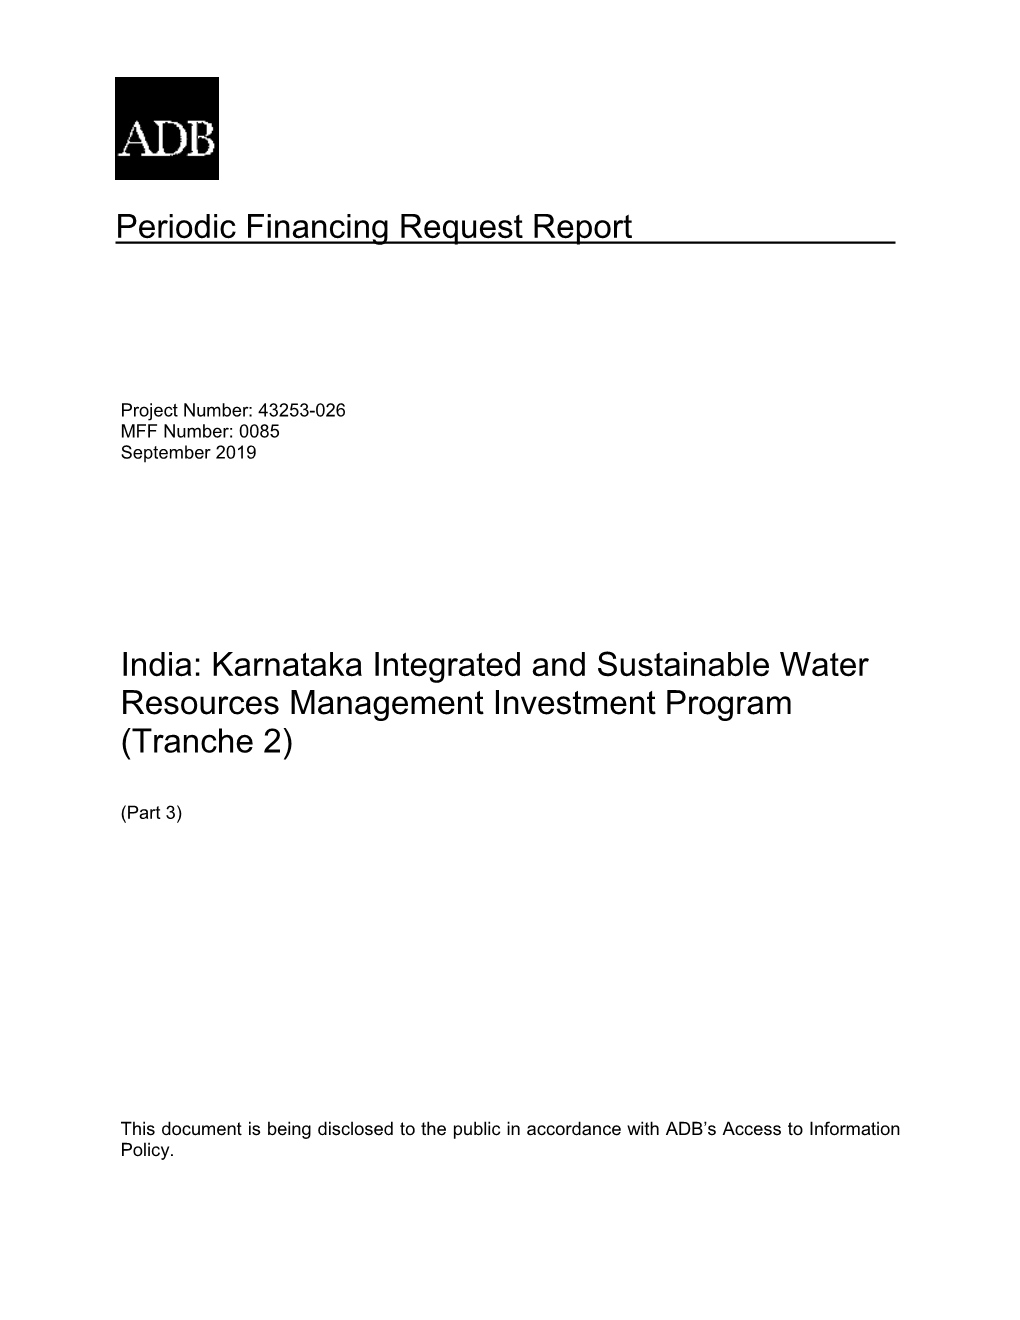 43253-026: Karnataka Integrated And